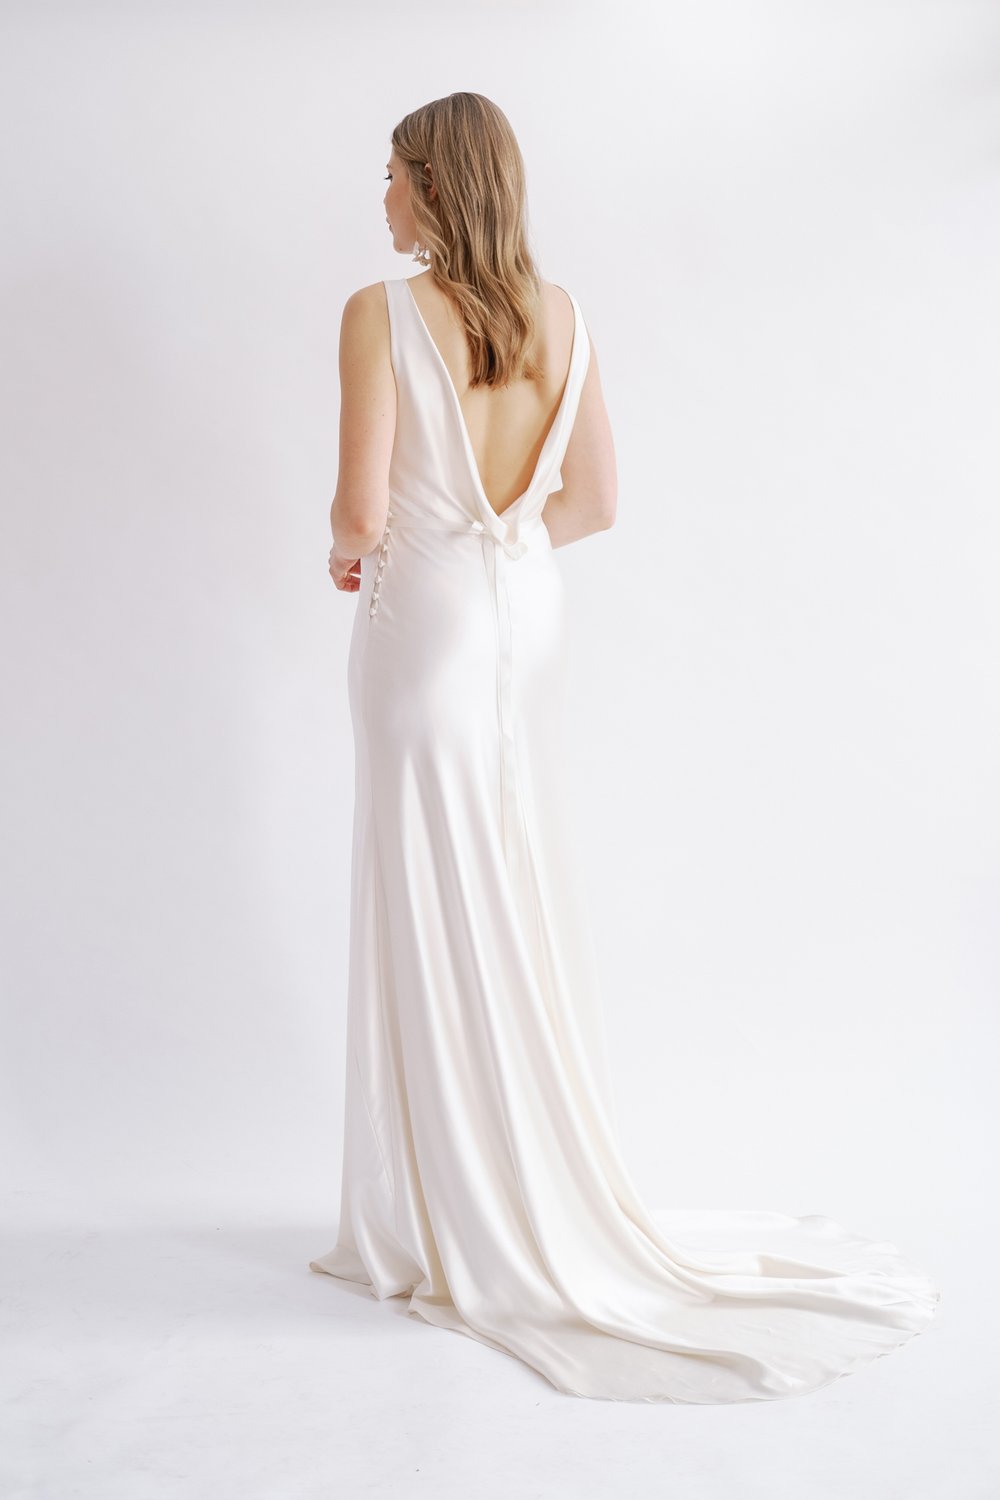 Gladioli silk wedding gown Kate Beaumont Sheffield 5.jpg